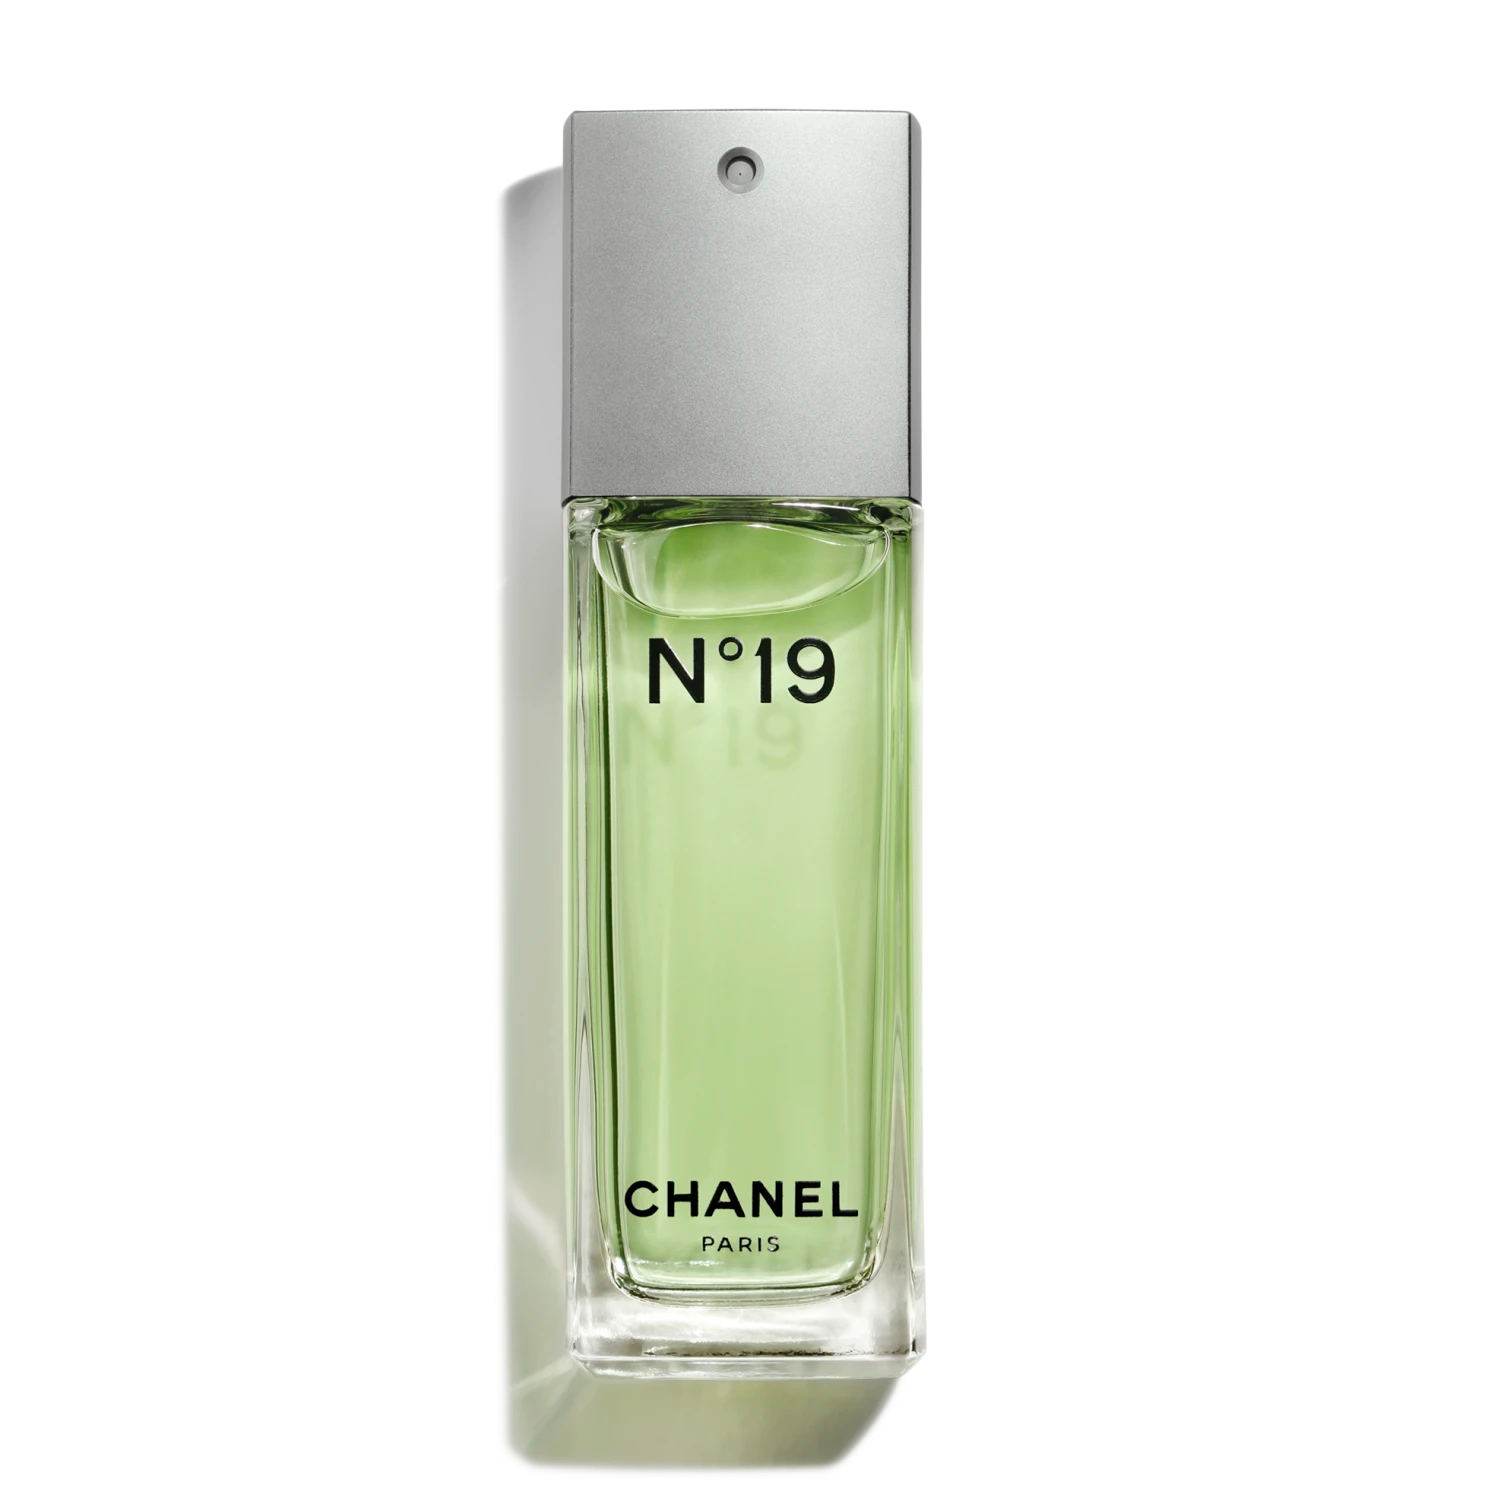 19 Top Luxury Perfume Brands (Designer Labels)